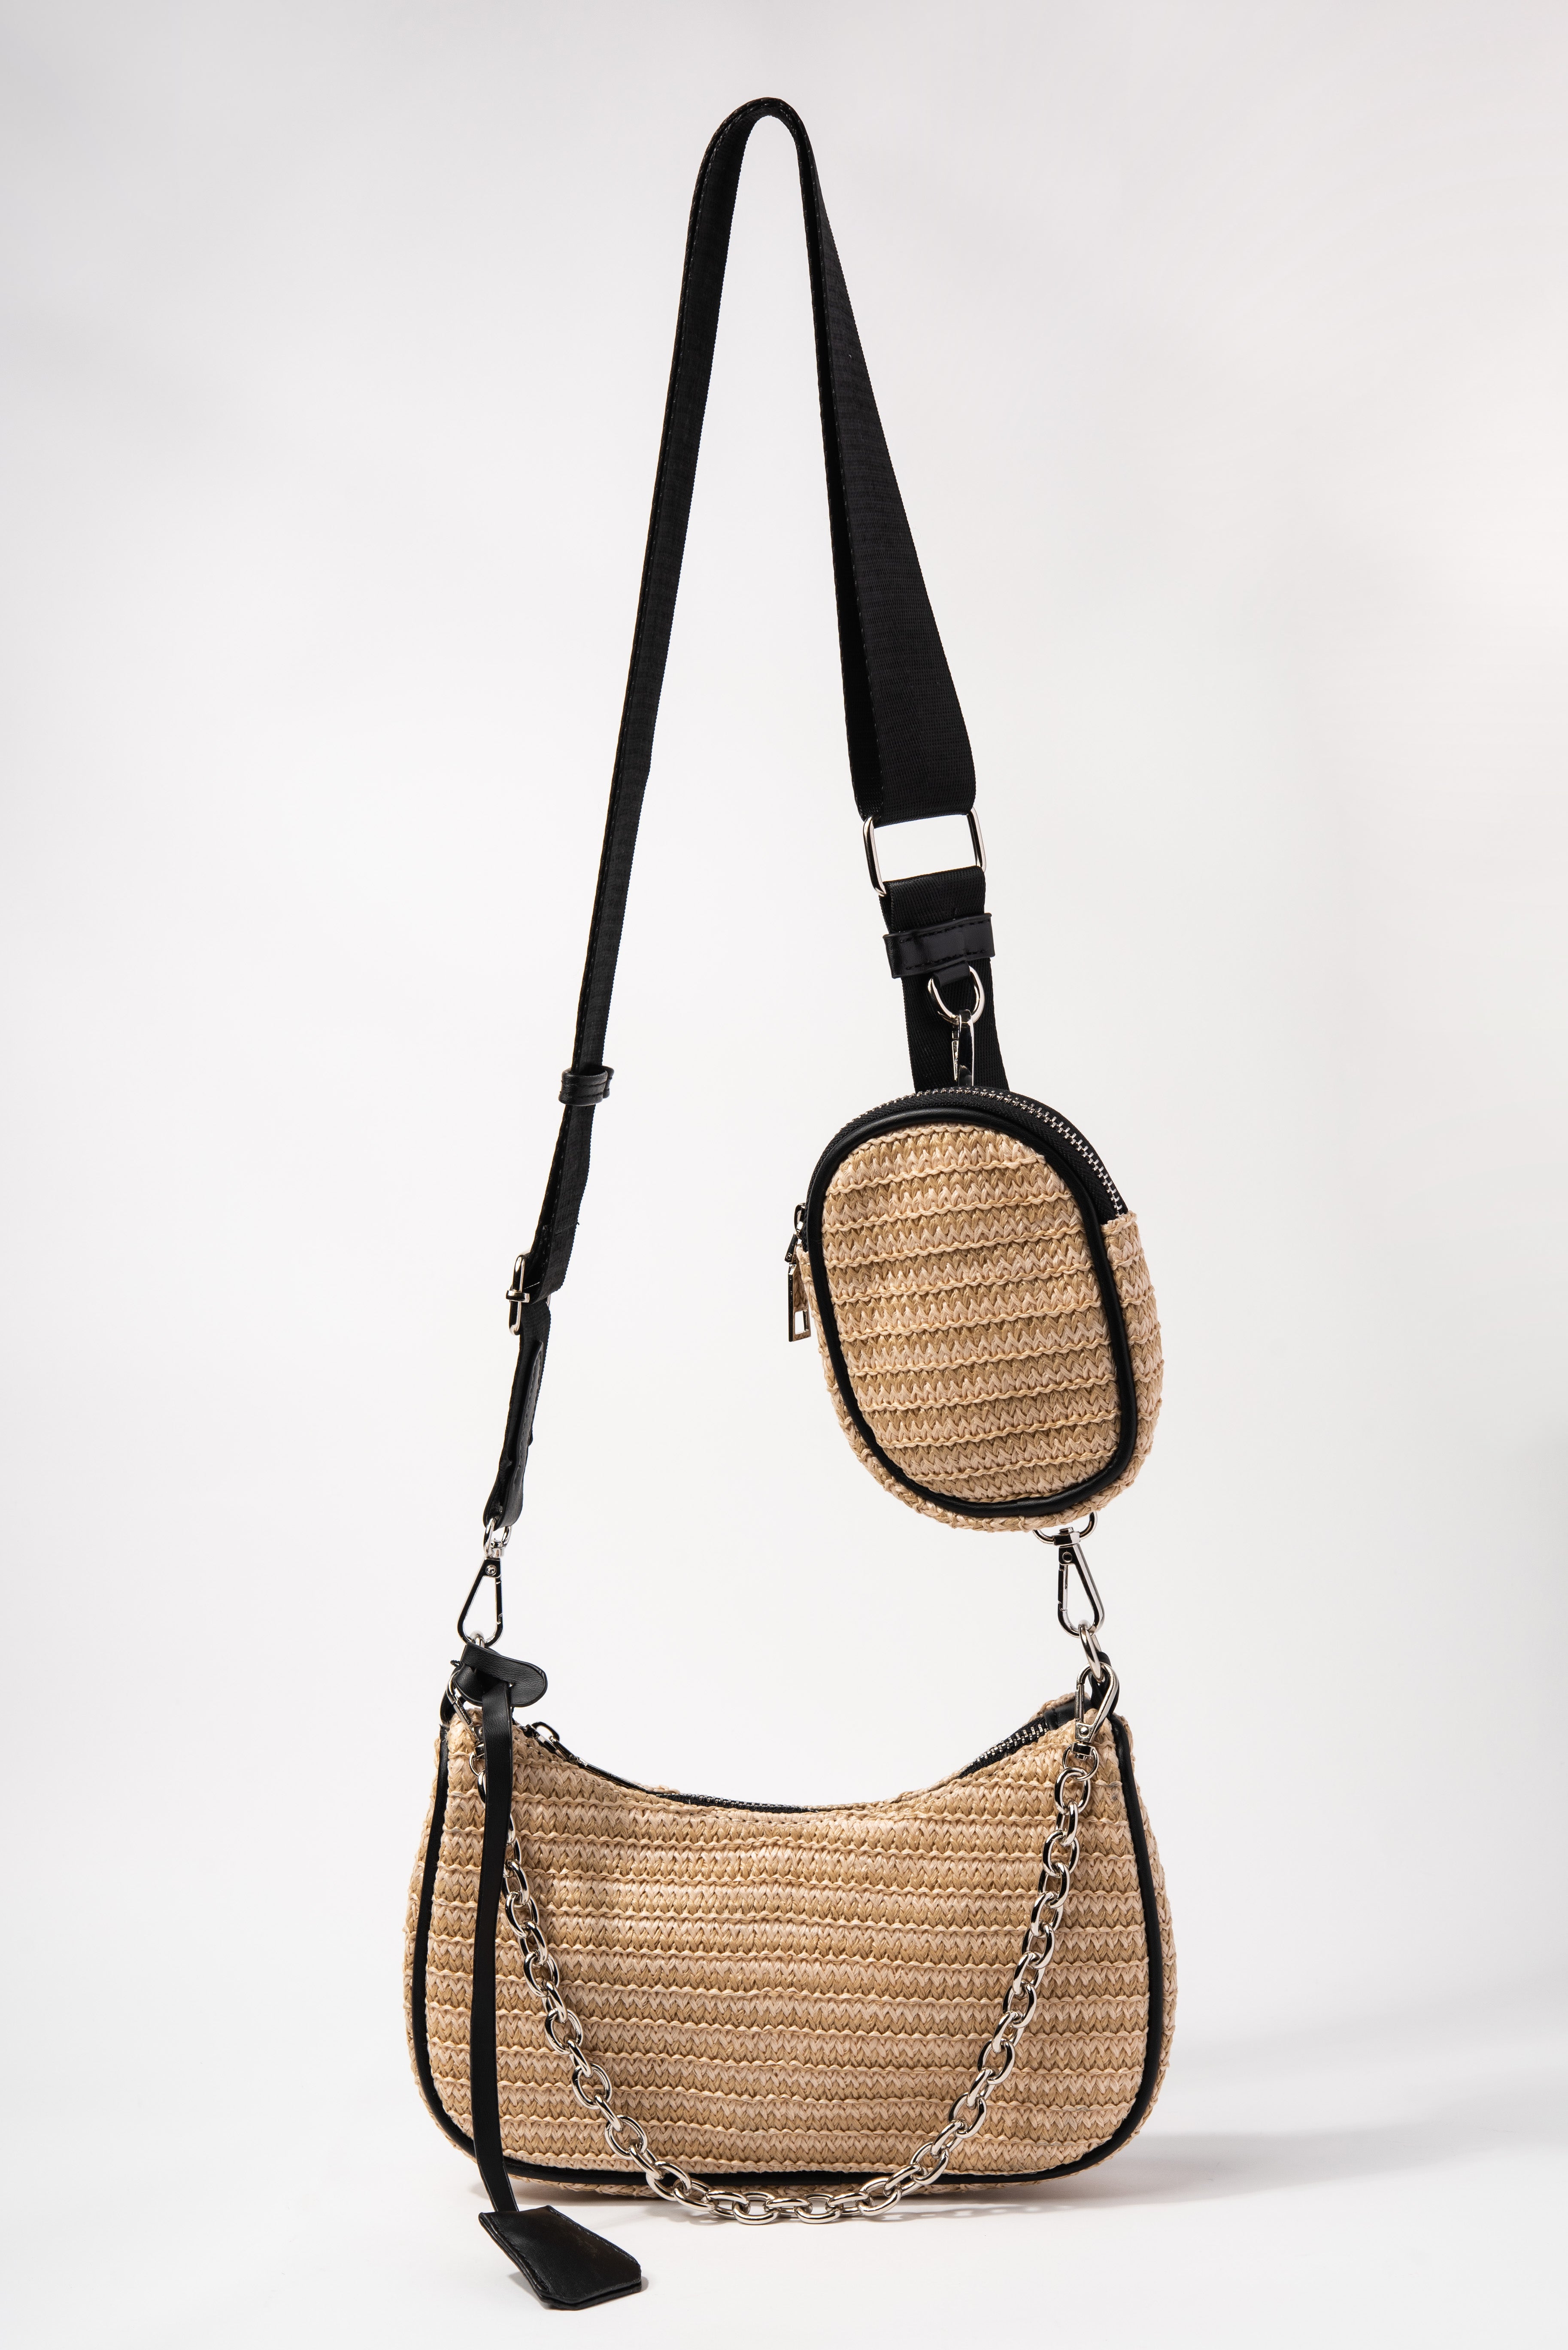 jowyar handmade rattan woven straw bag| Alibaba.com